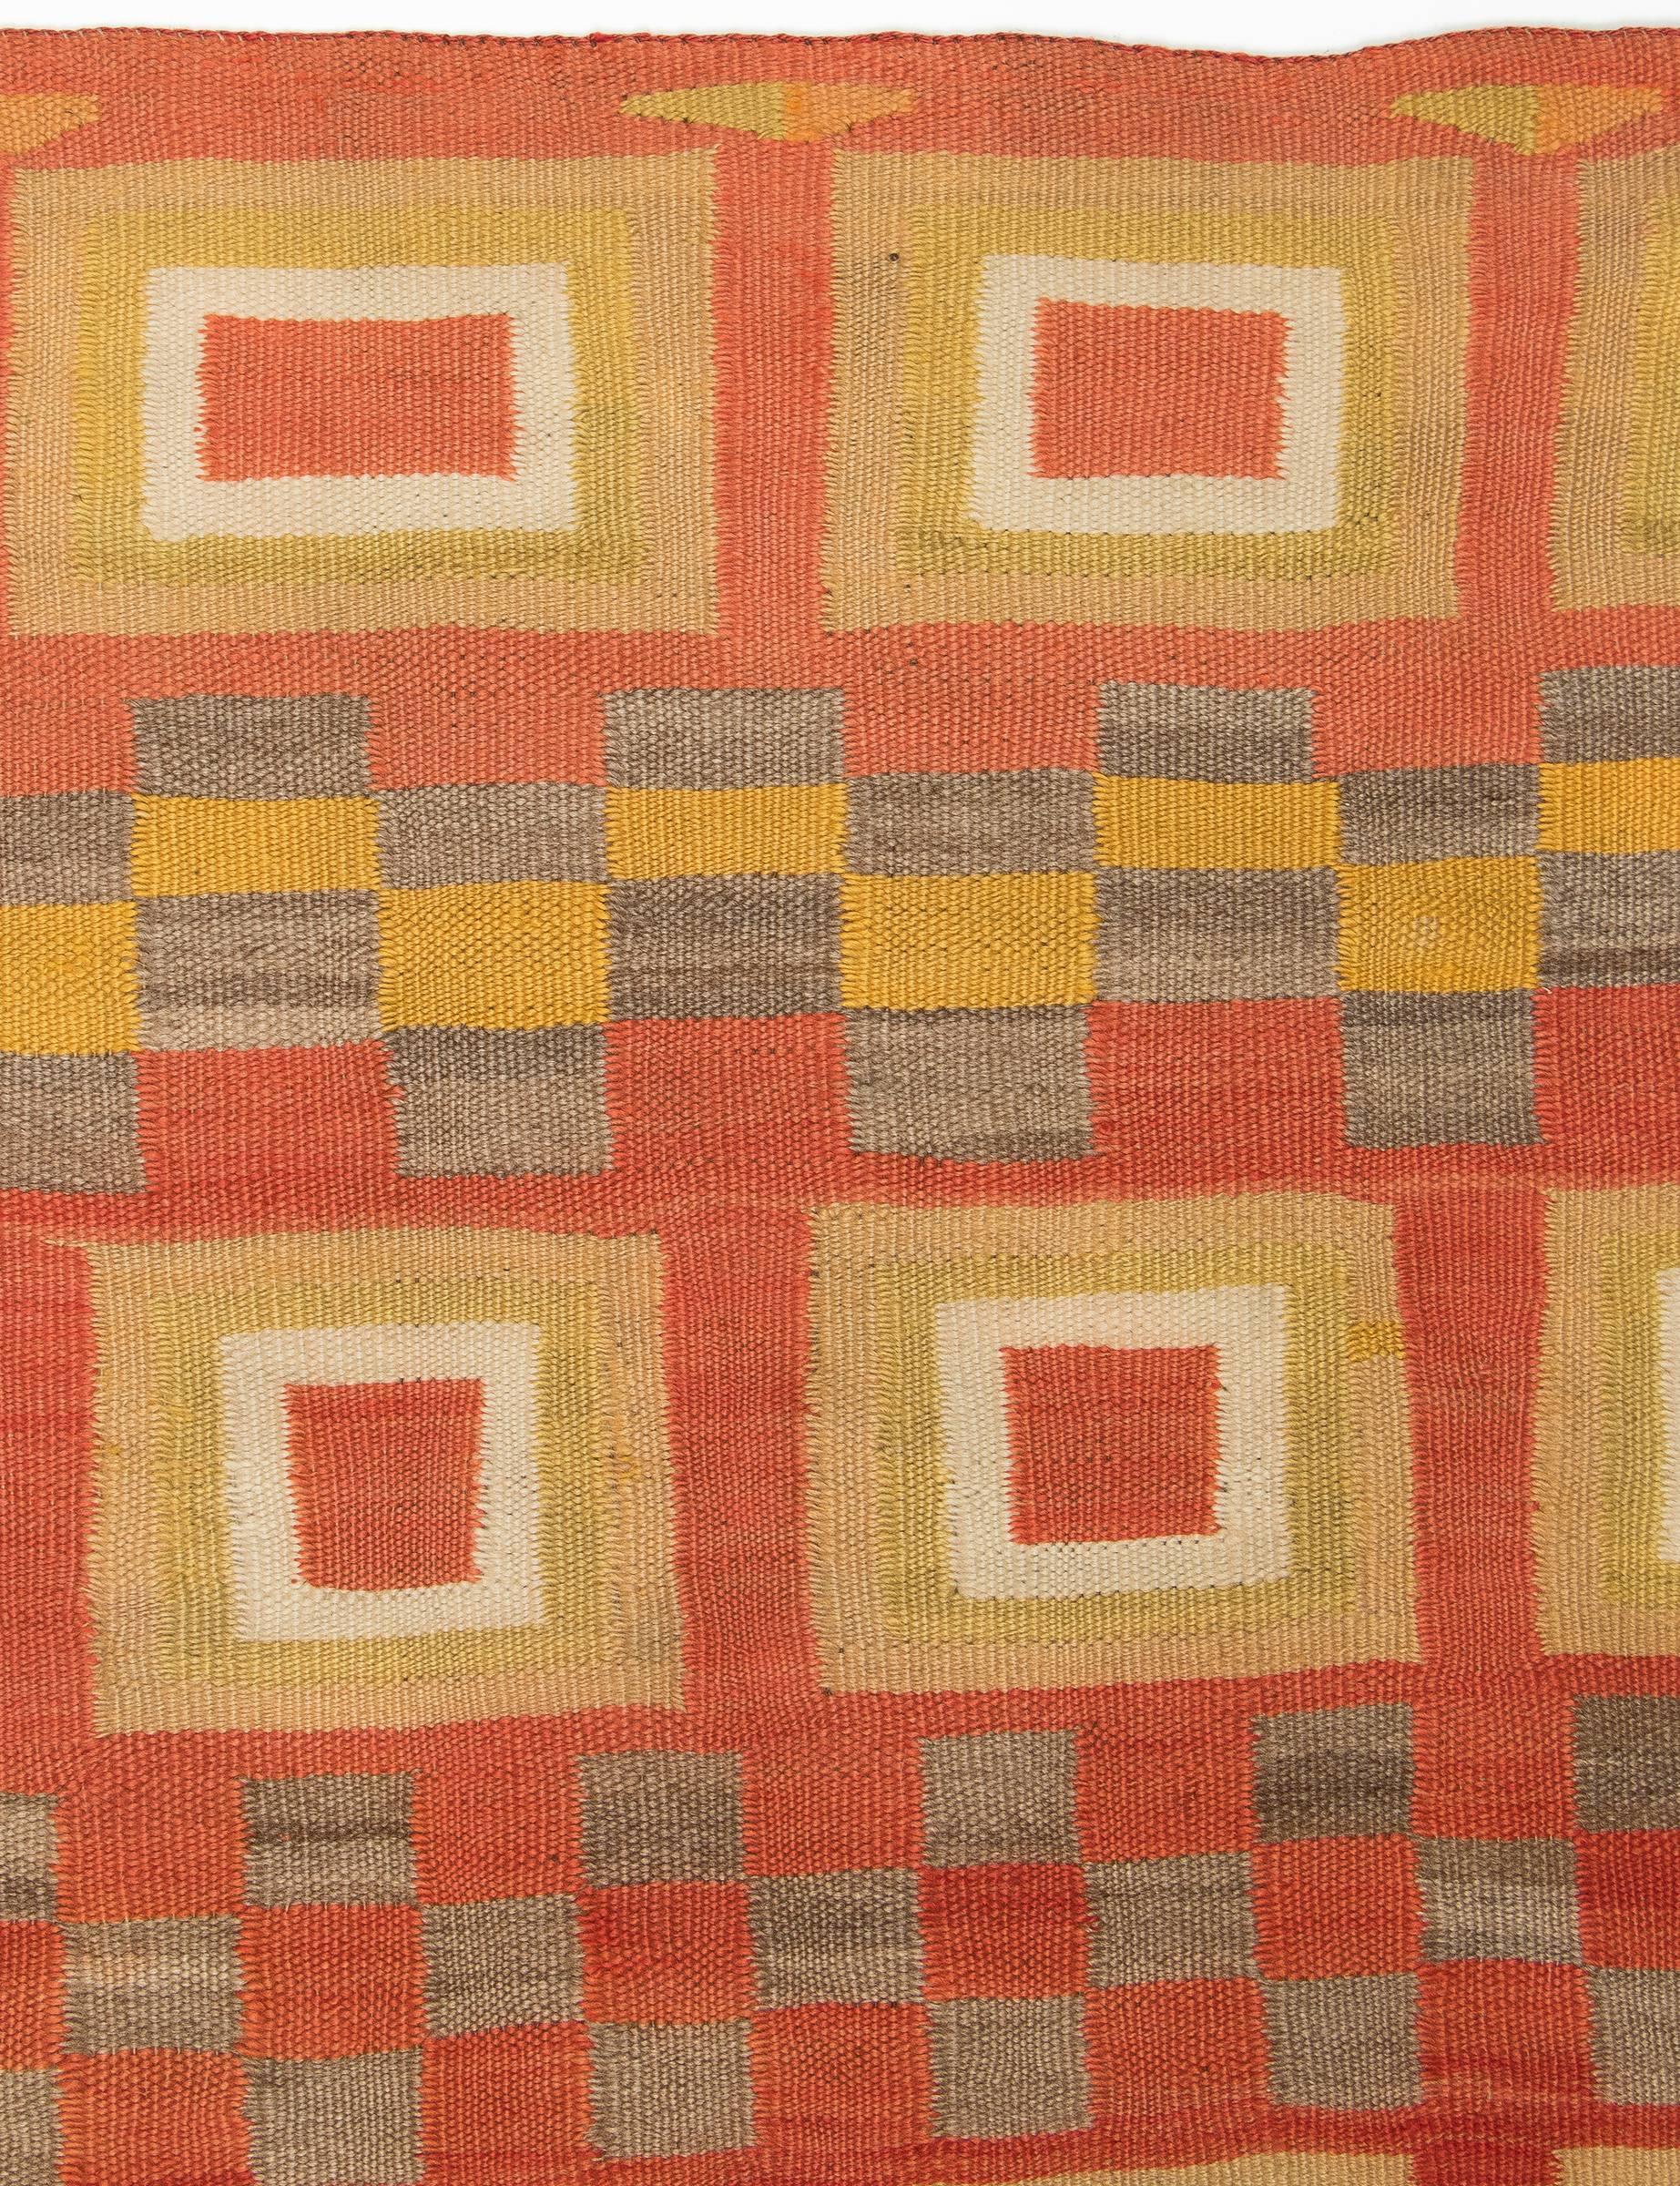 Hand-Woven Antique Native American Transitional Blanket, Navajo Textile, circa 1900